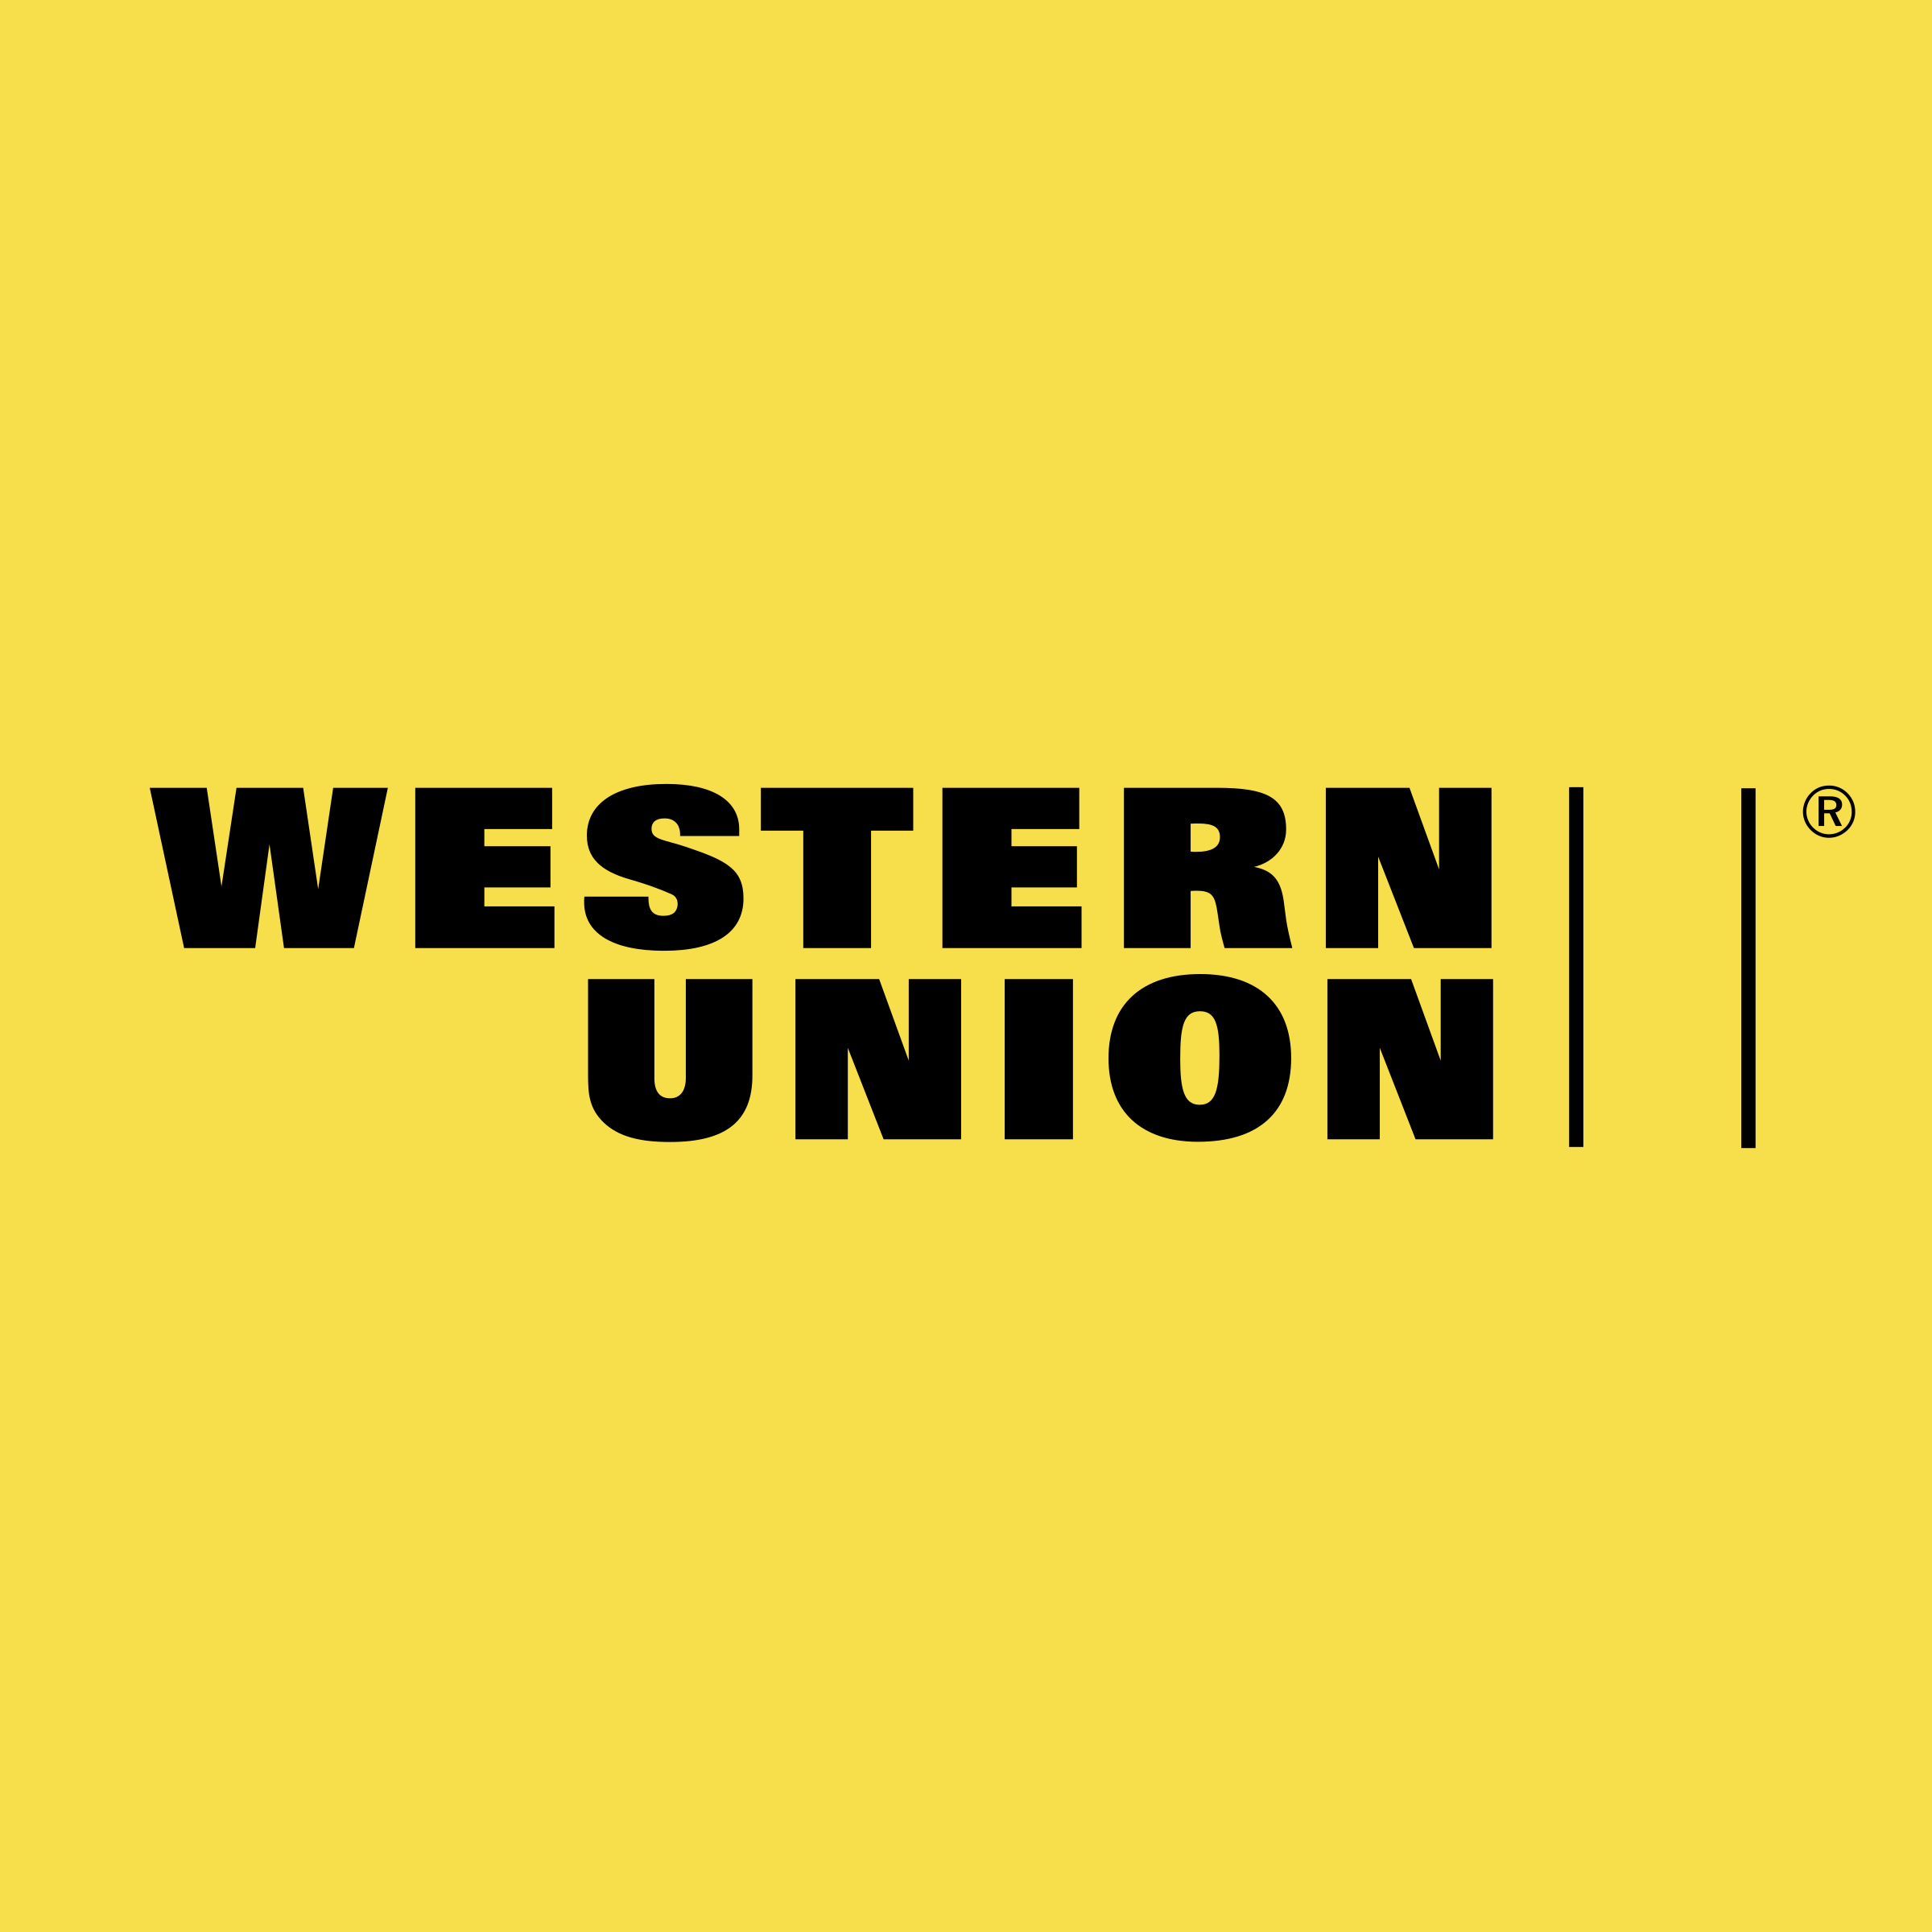 Westernunion Logo - Western Union Logo PNG Transparent & SVG Vector - Freebie Supply